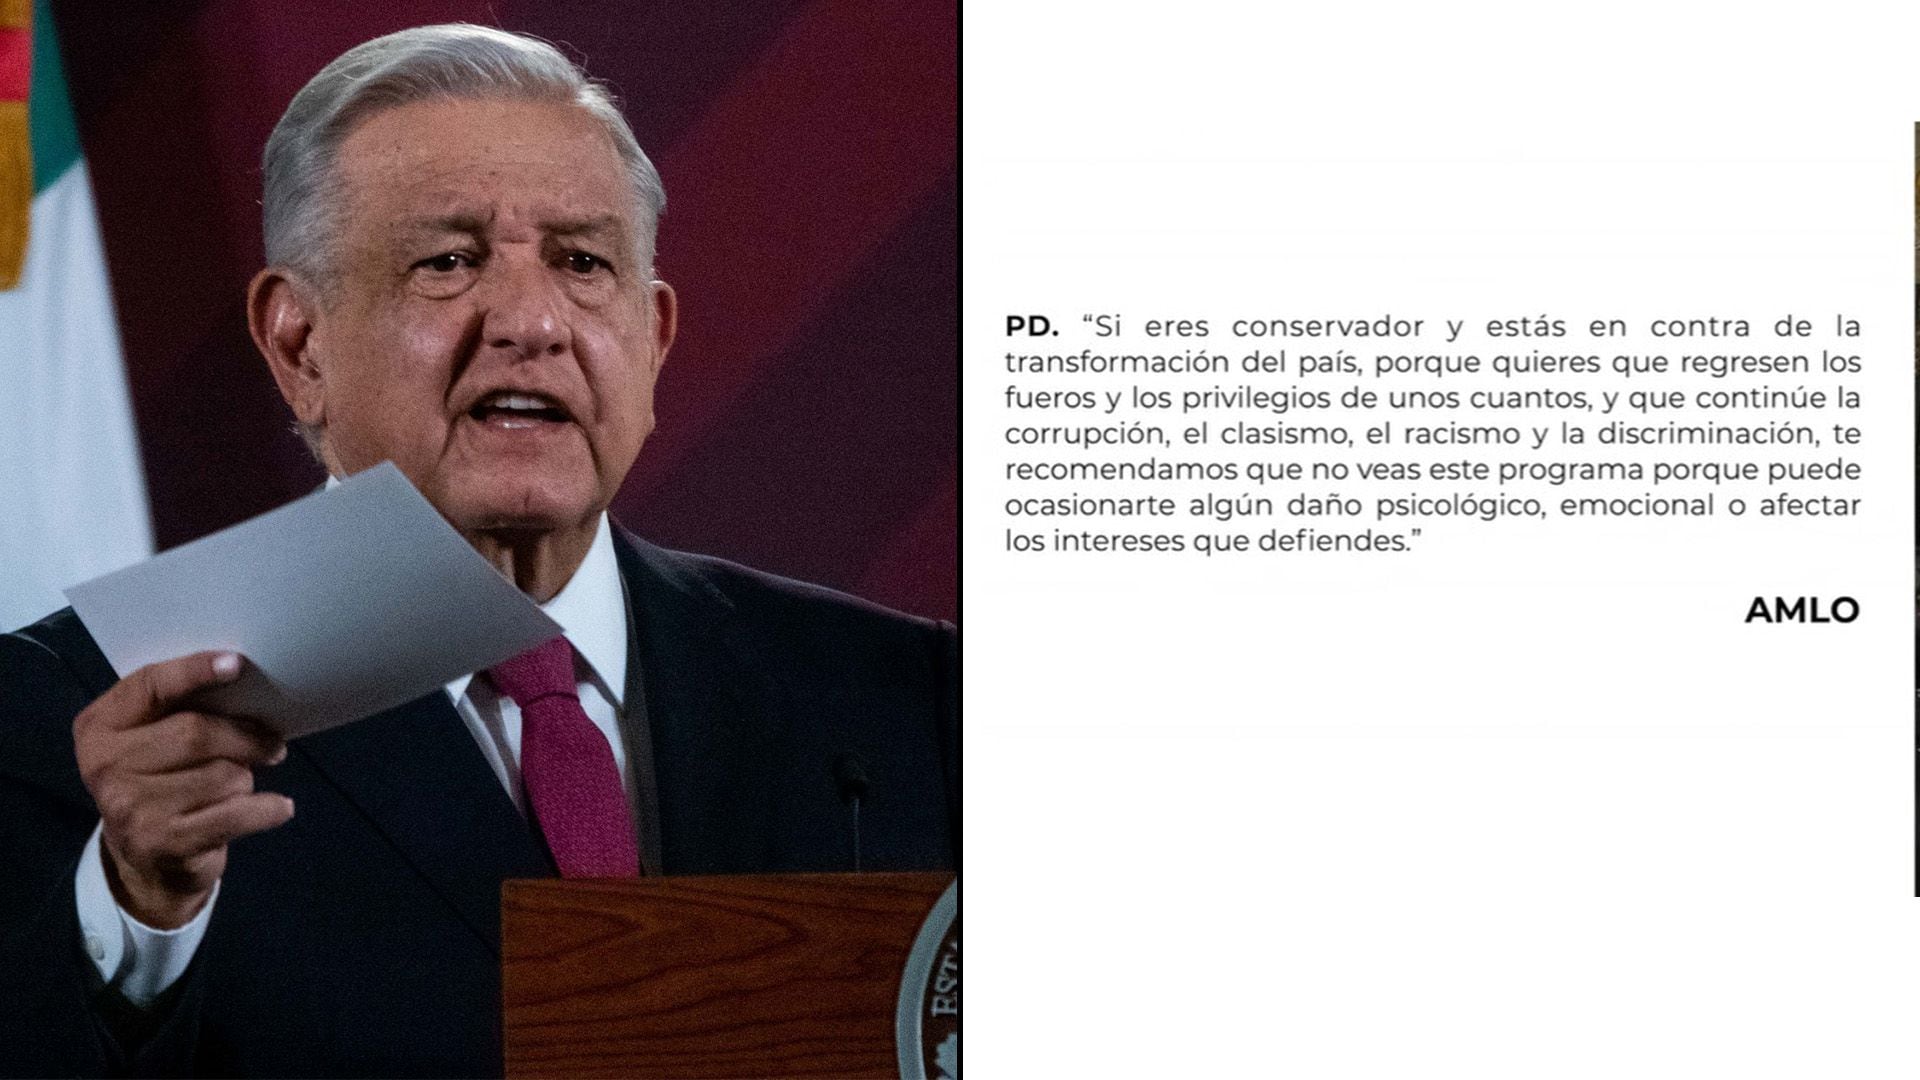 The president showed his postscript in the announcement despite the demand of the INE Photo: quarterscuro